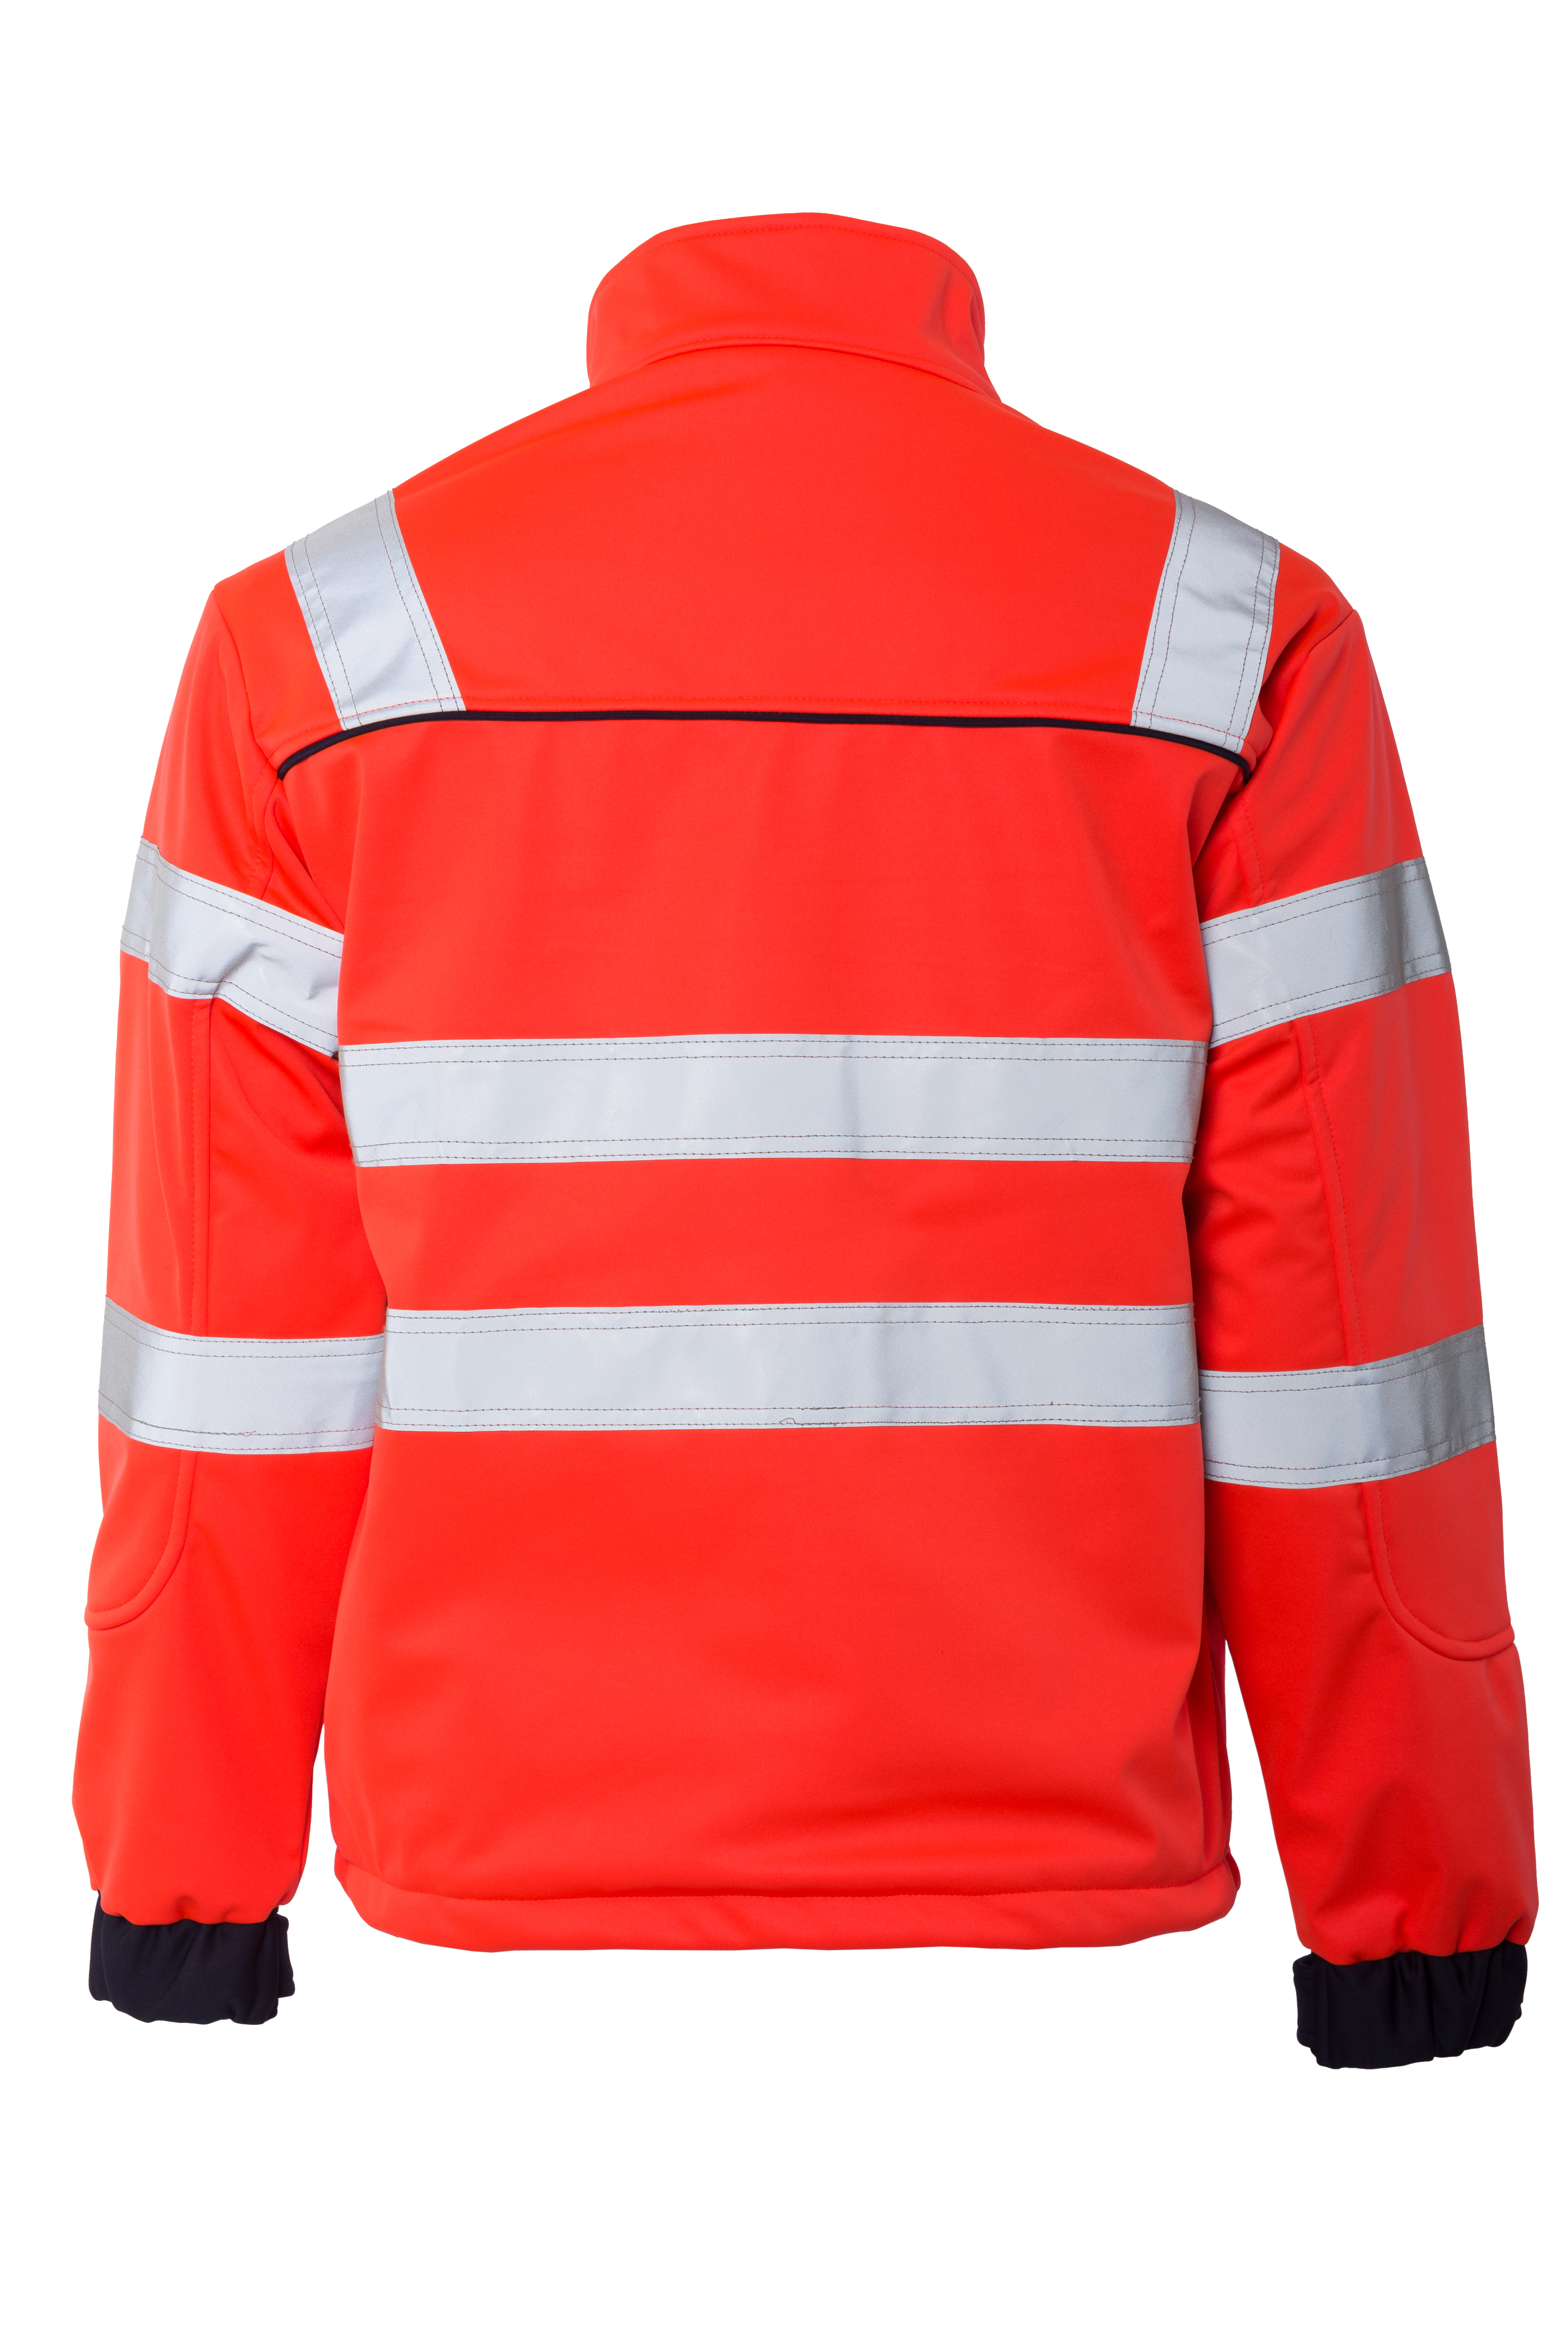 Rescuewear Softshelljacke Dynamic HiVis Klasse 3 Marineblau / Neon Rot `W-Linie` - XXS